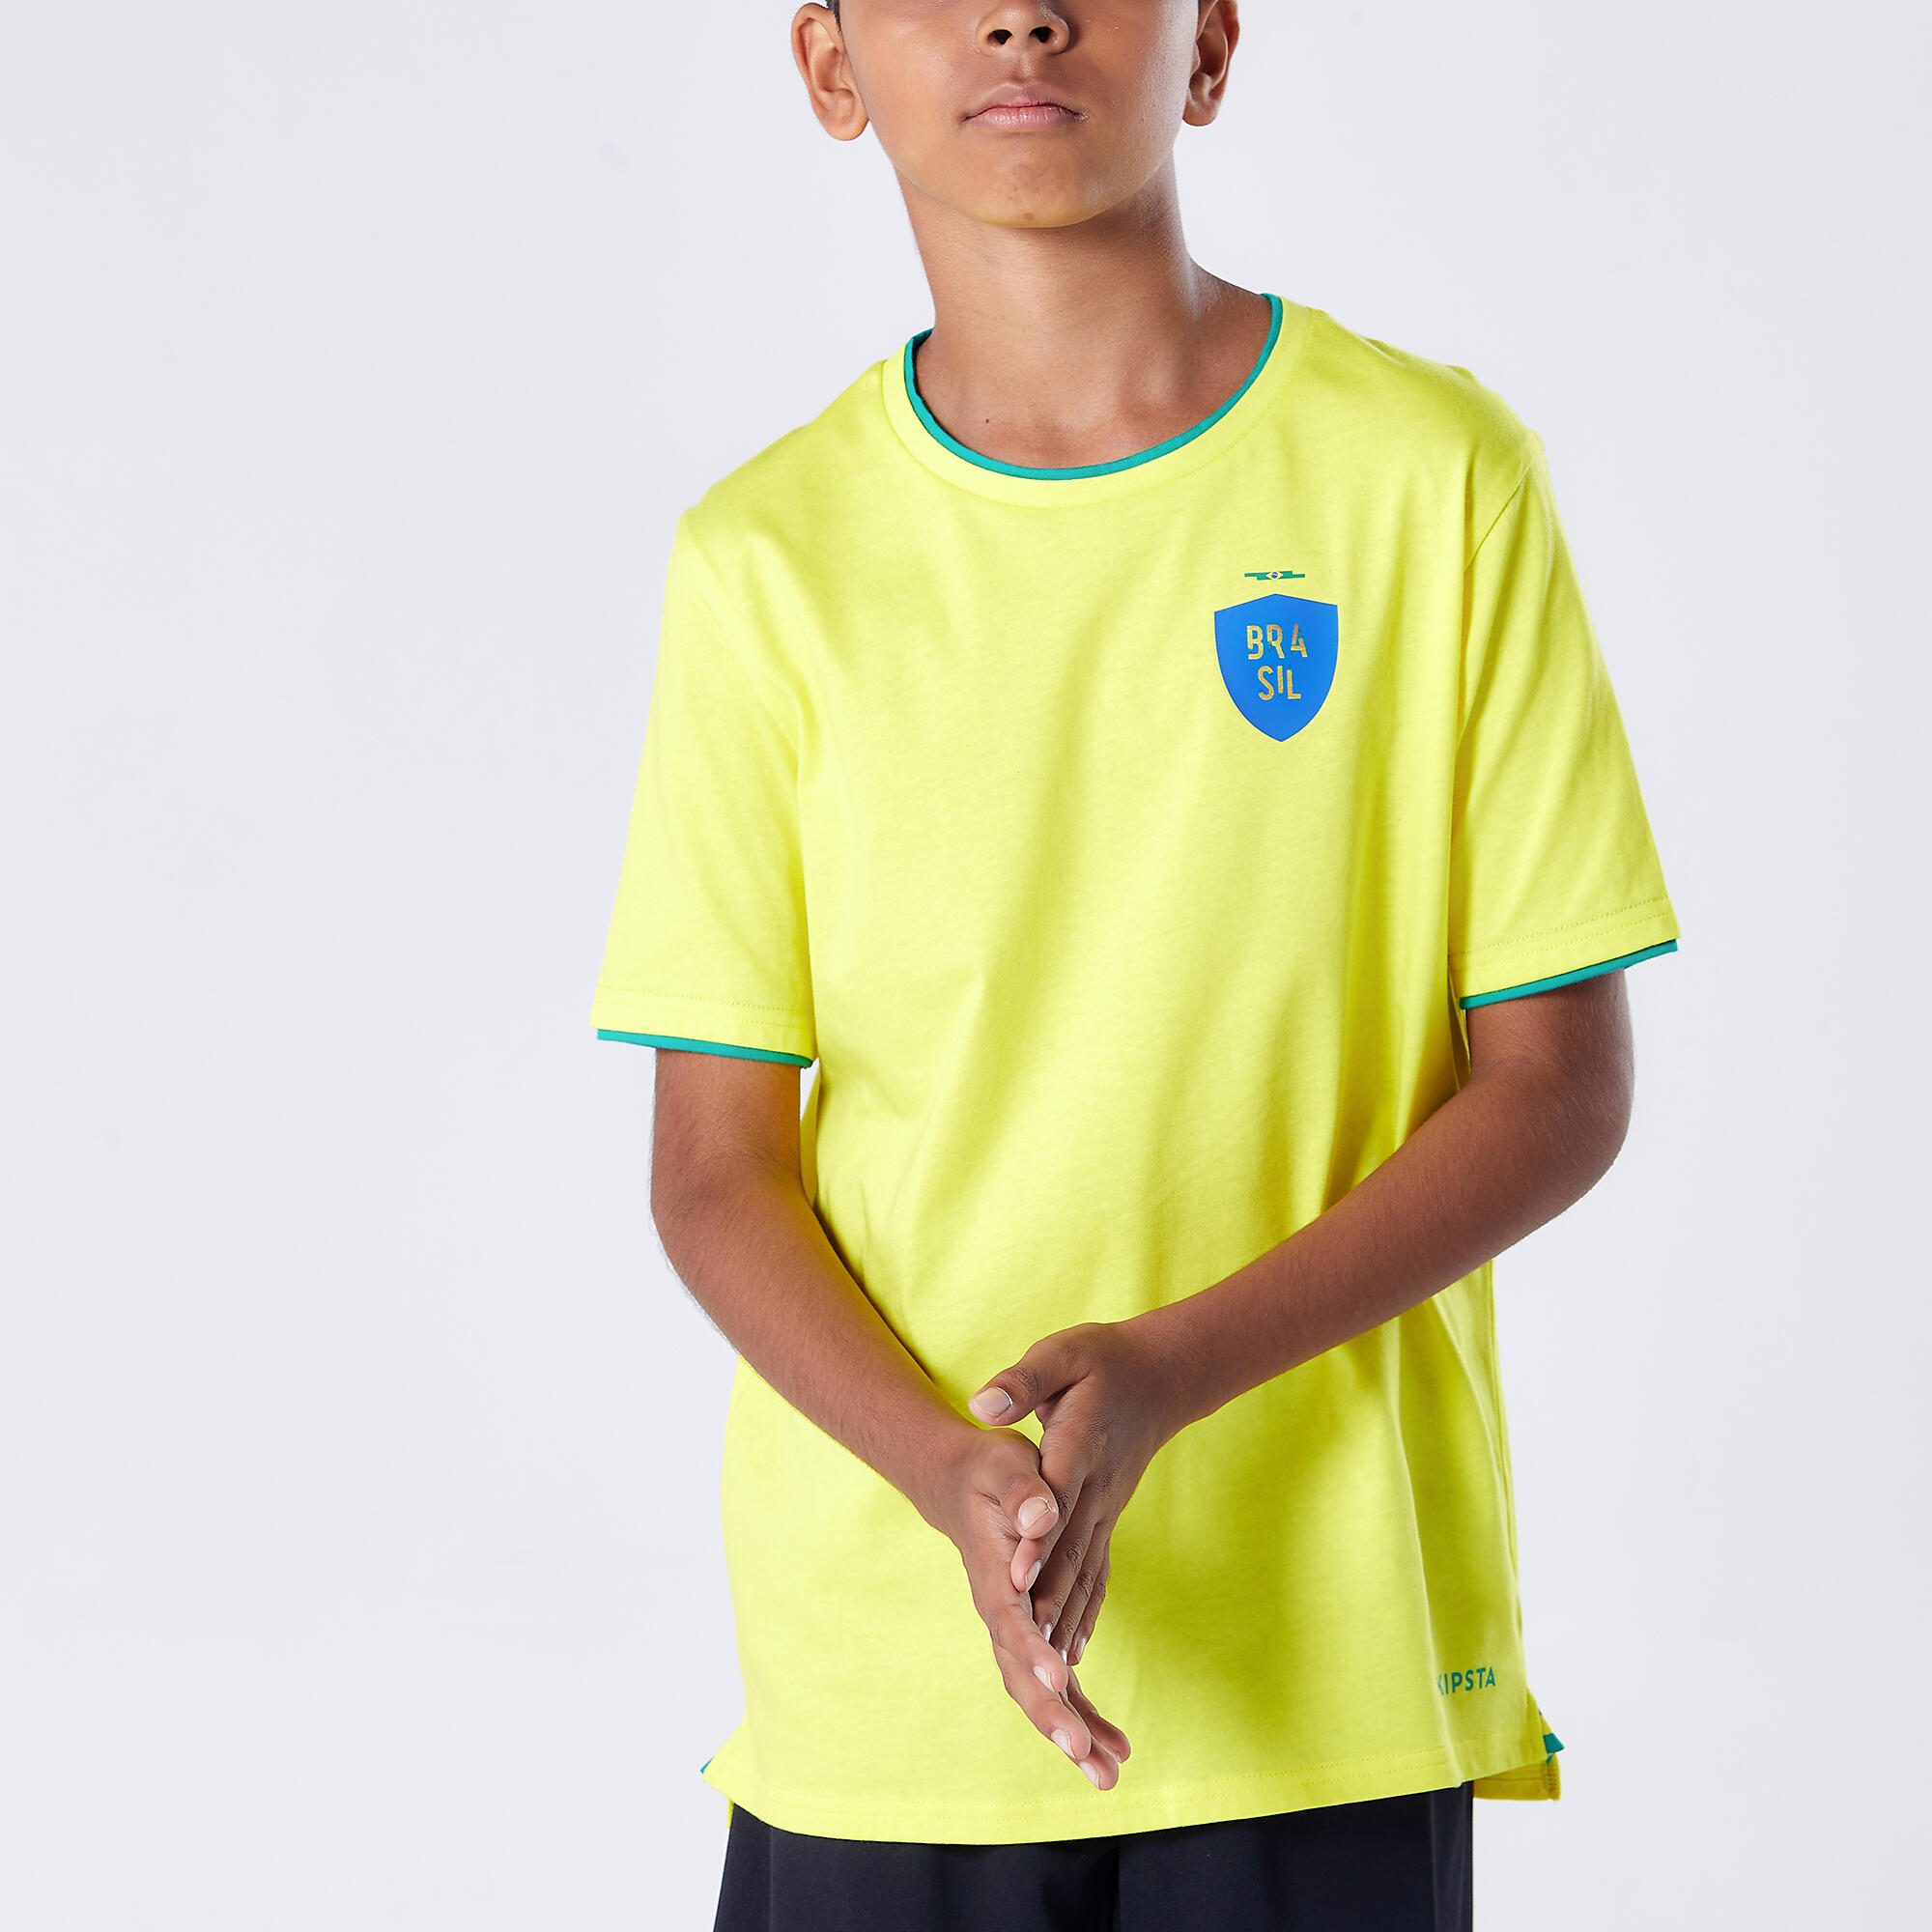  BDONDON Unisex Football Jerseys for Kids Brasil